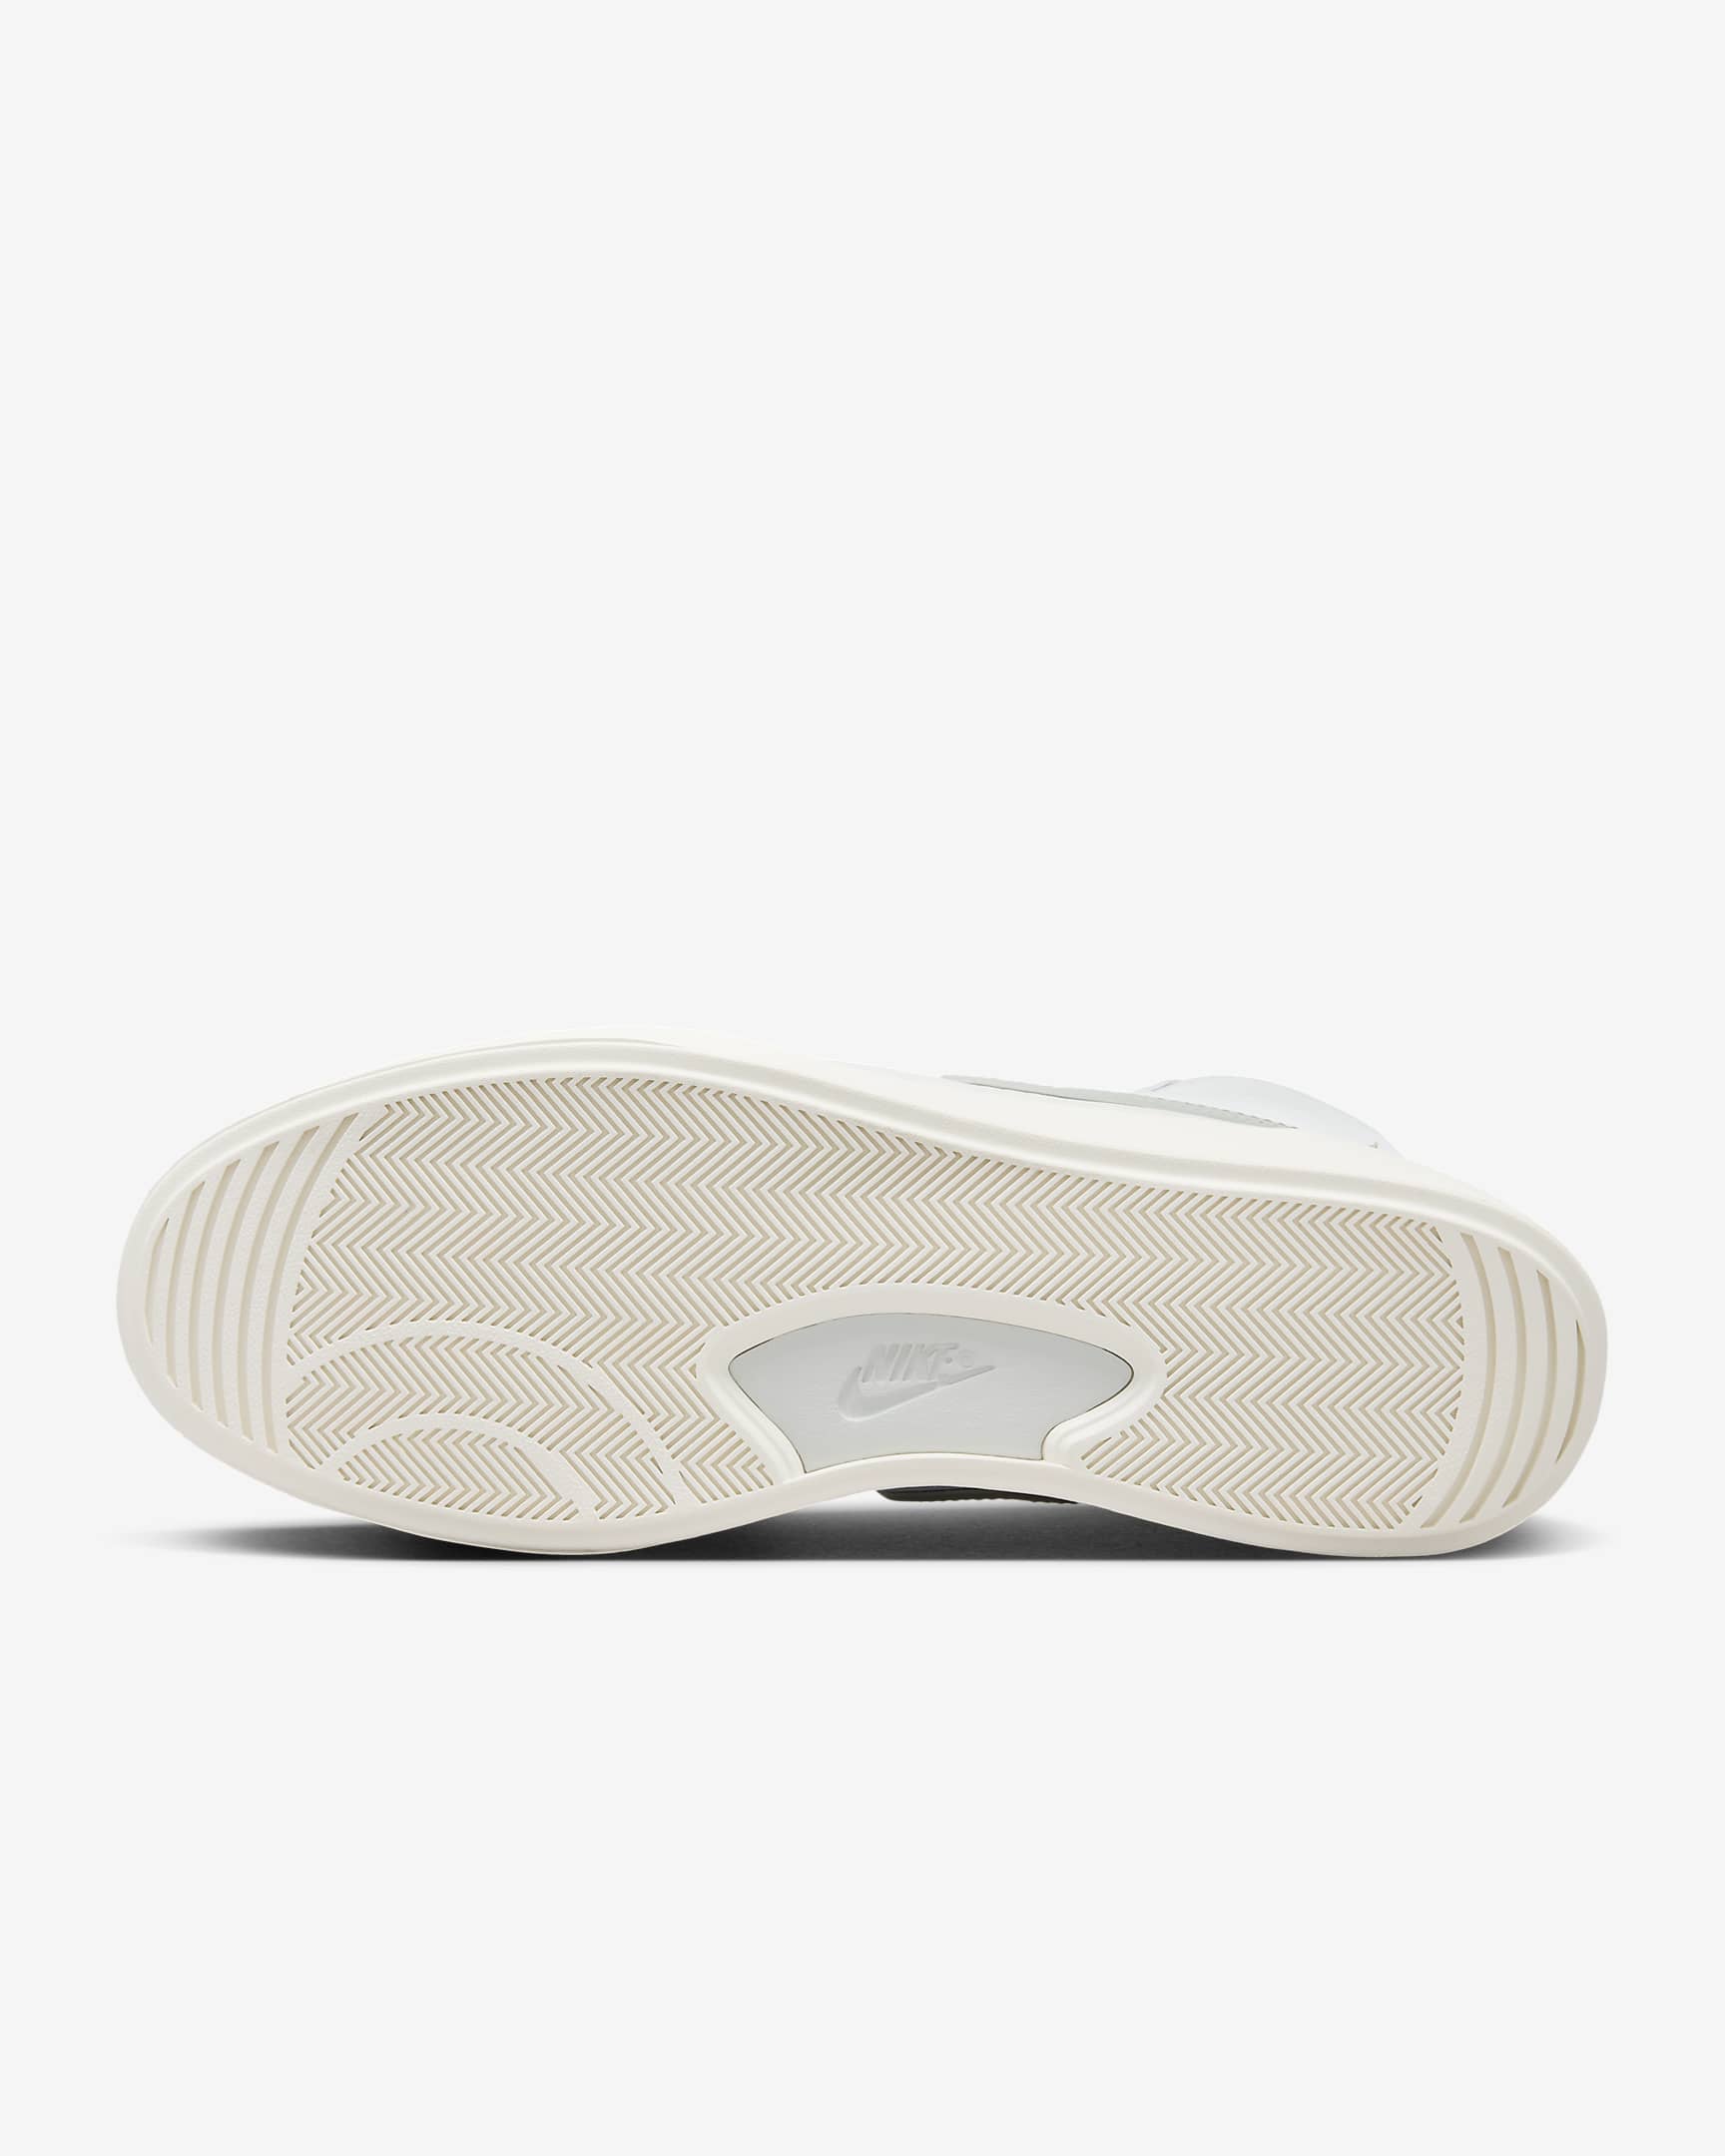 Nike Blazer Phantom Mid Men's Shoes - White/Summit White/Phantom/Light Pumice